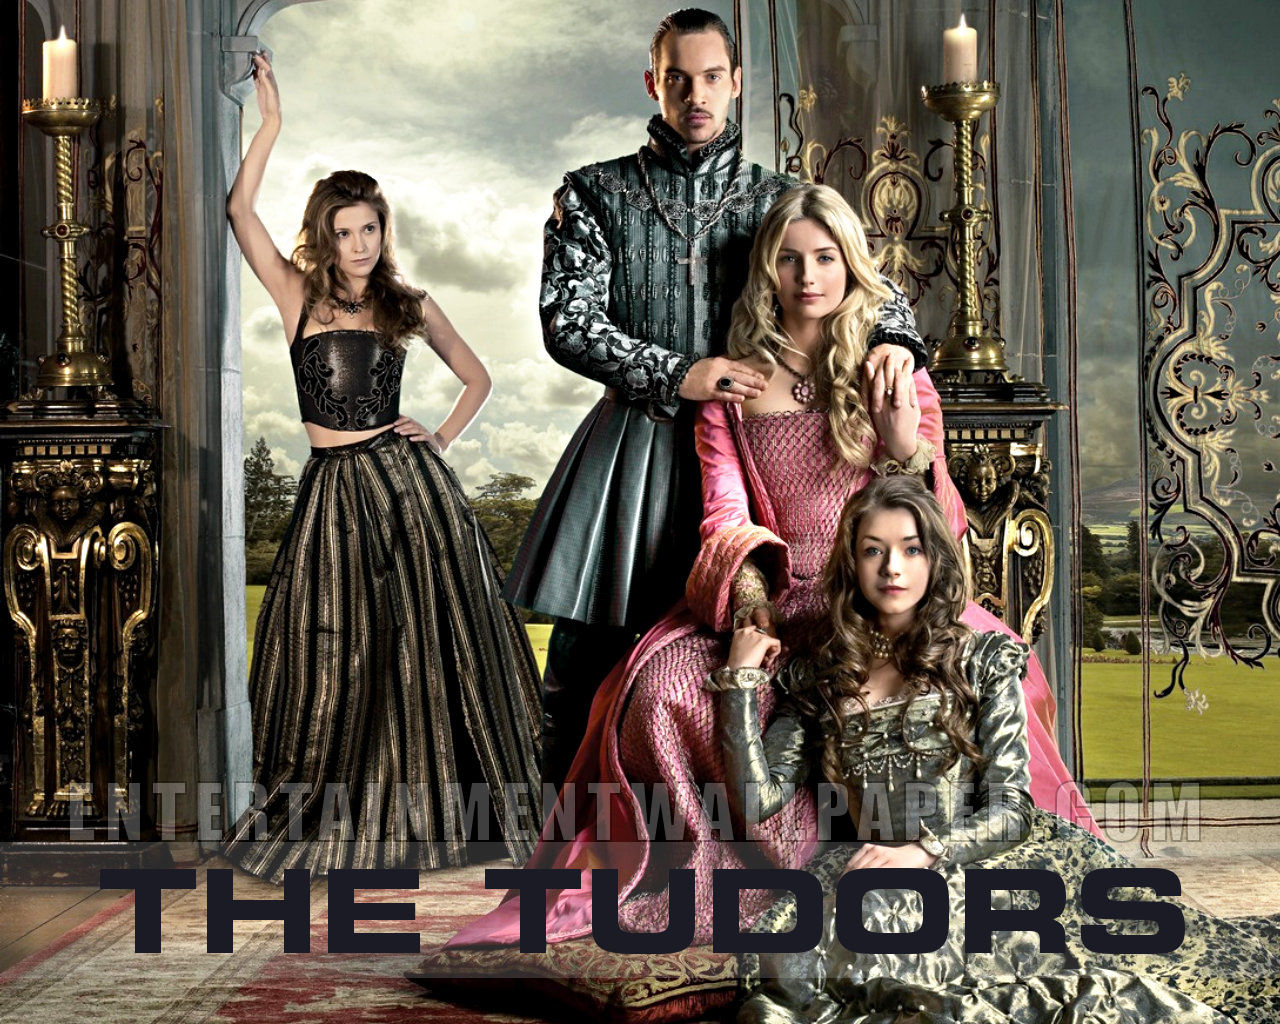 The Tudors Women Of Wallpaper